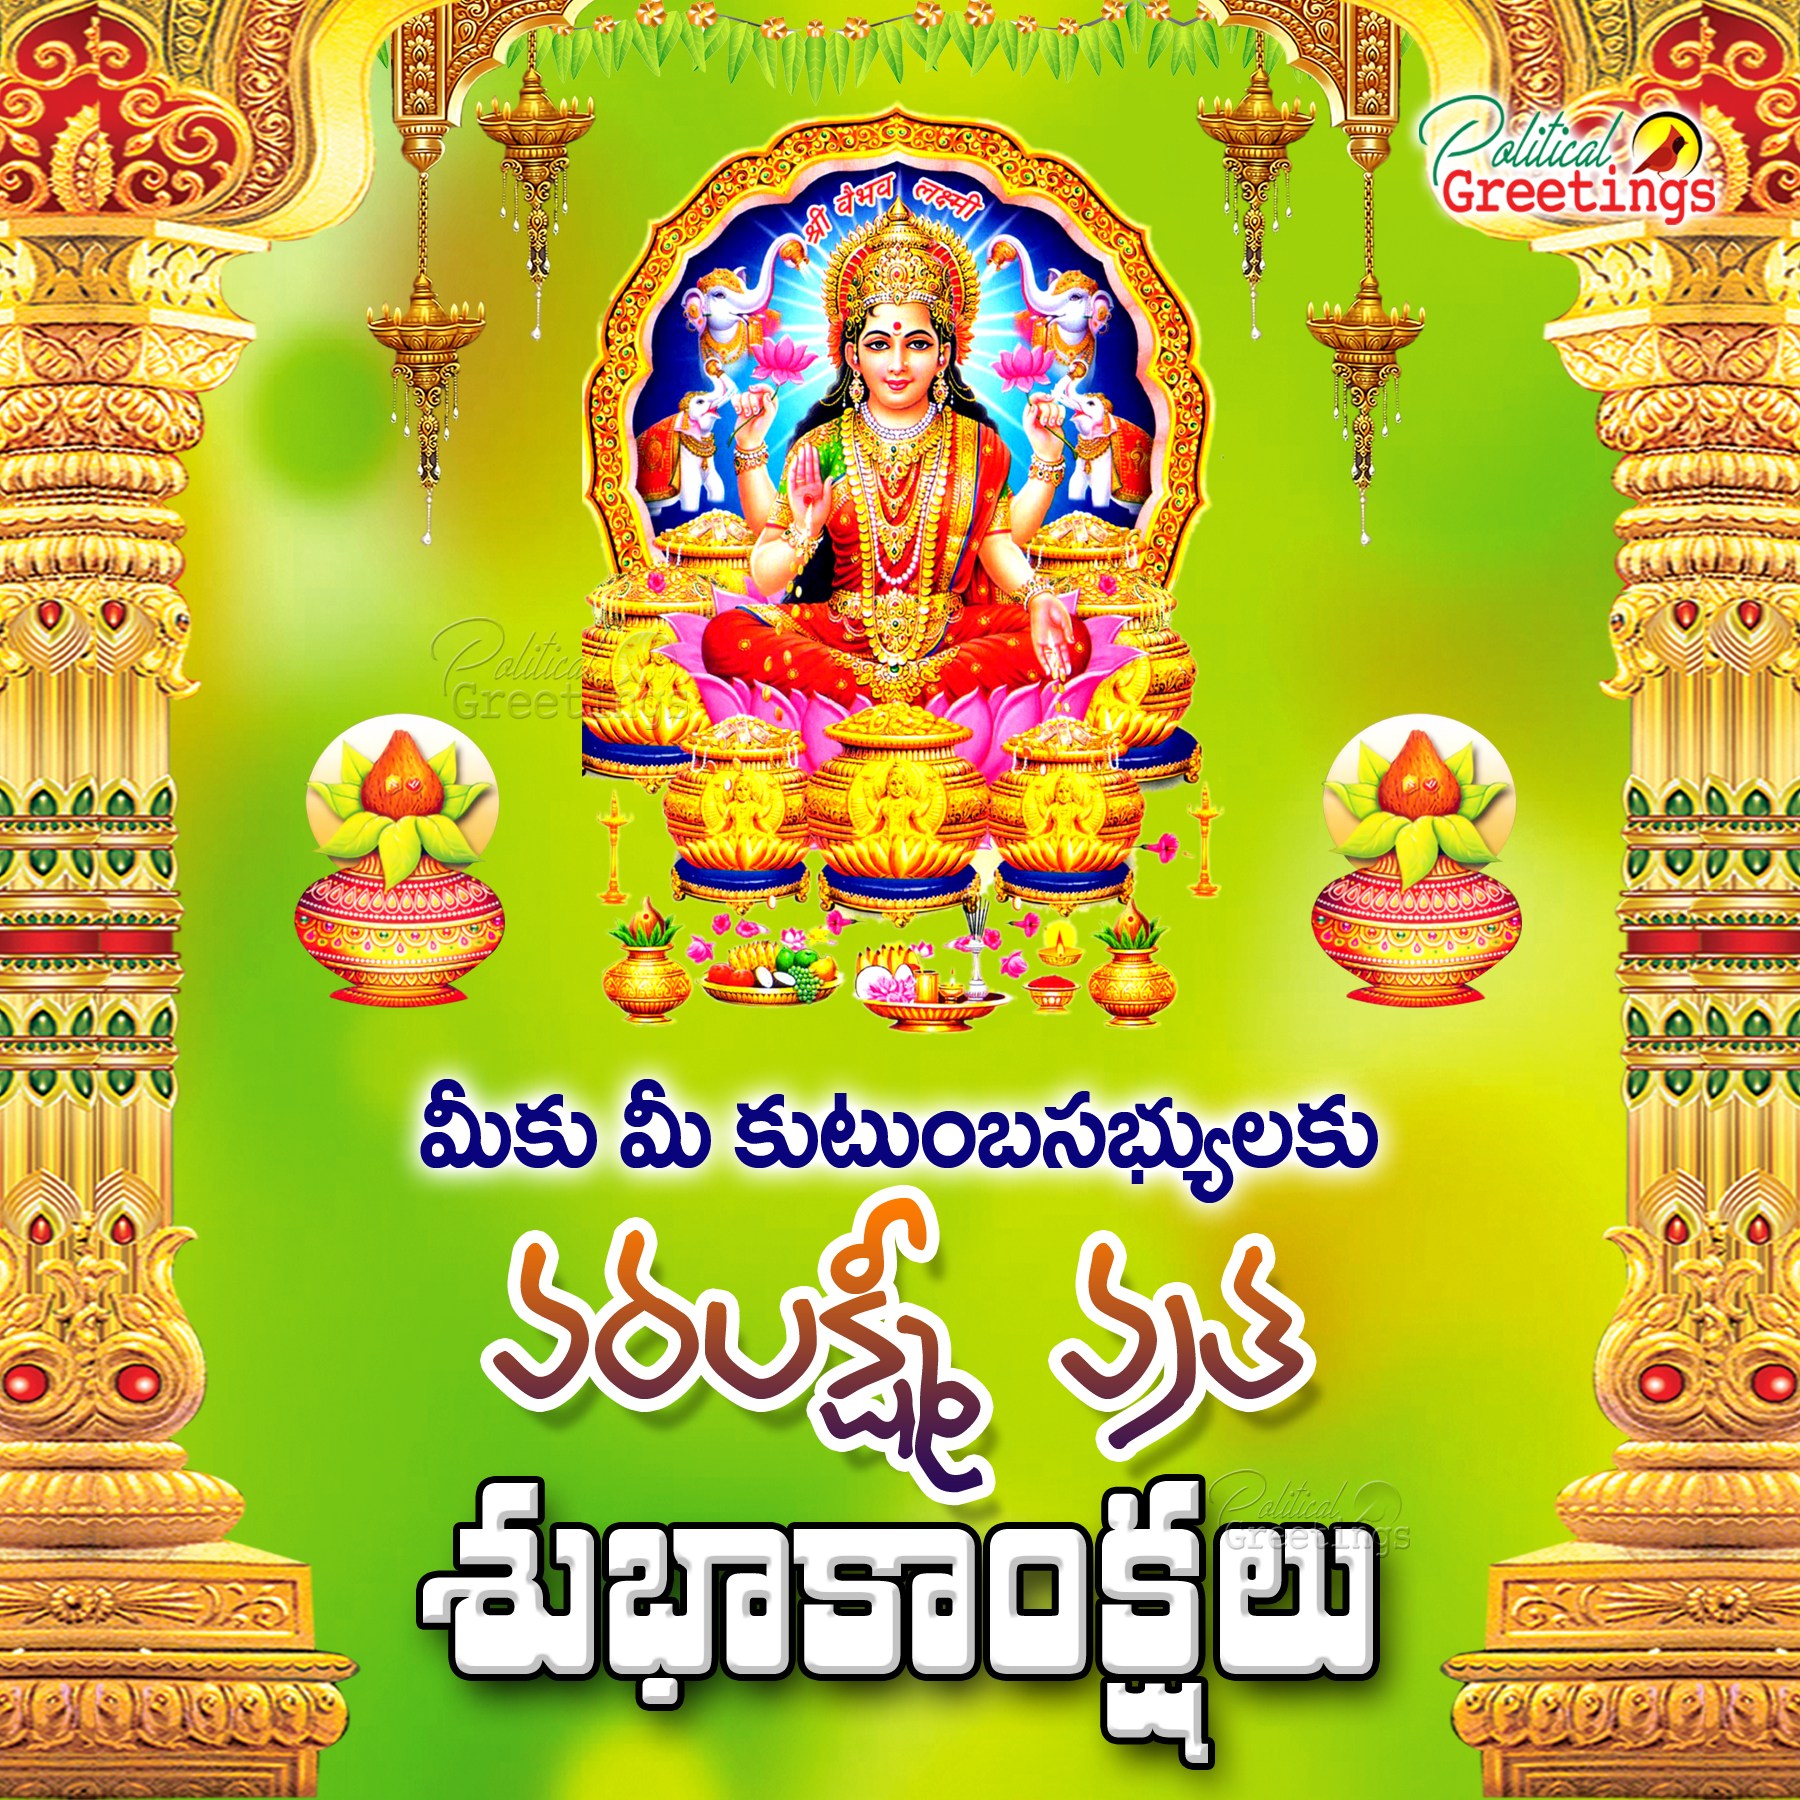 Sravana Varalakshmi Vratam Greetings With Goddess Lakshmi - Varalakshmi Vratham 2018 Wishes In Telugu , HD Wallpaper & Backgrounds